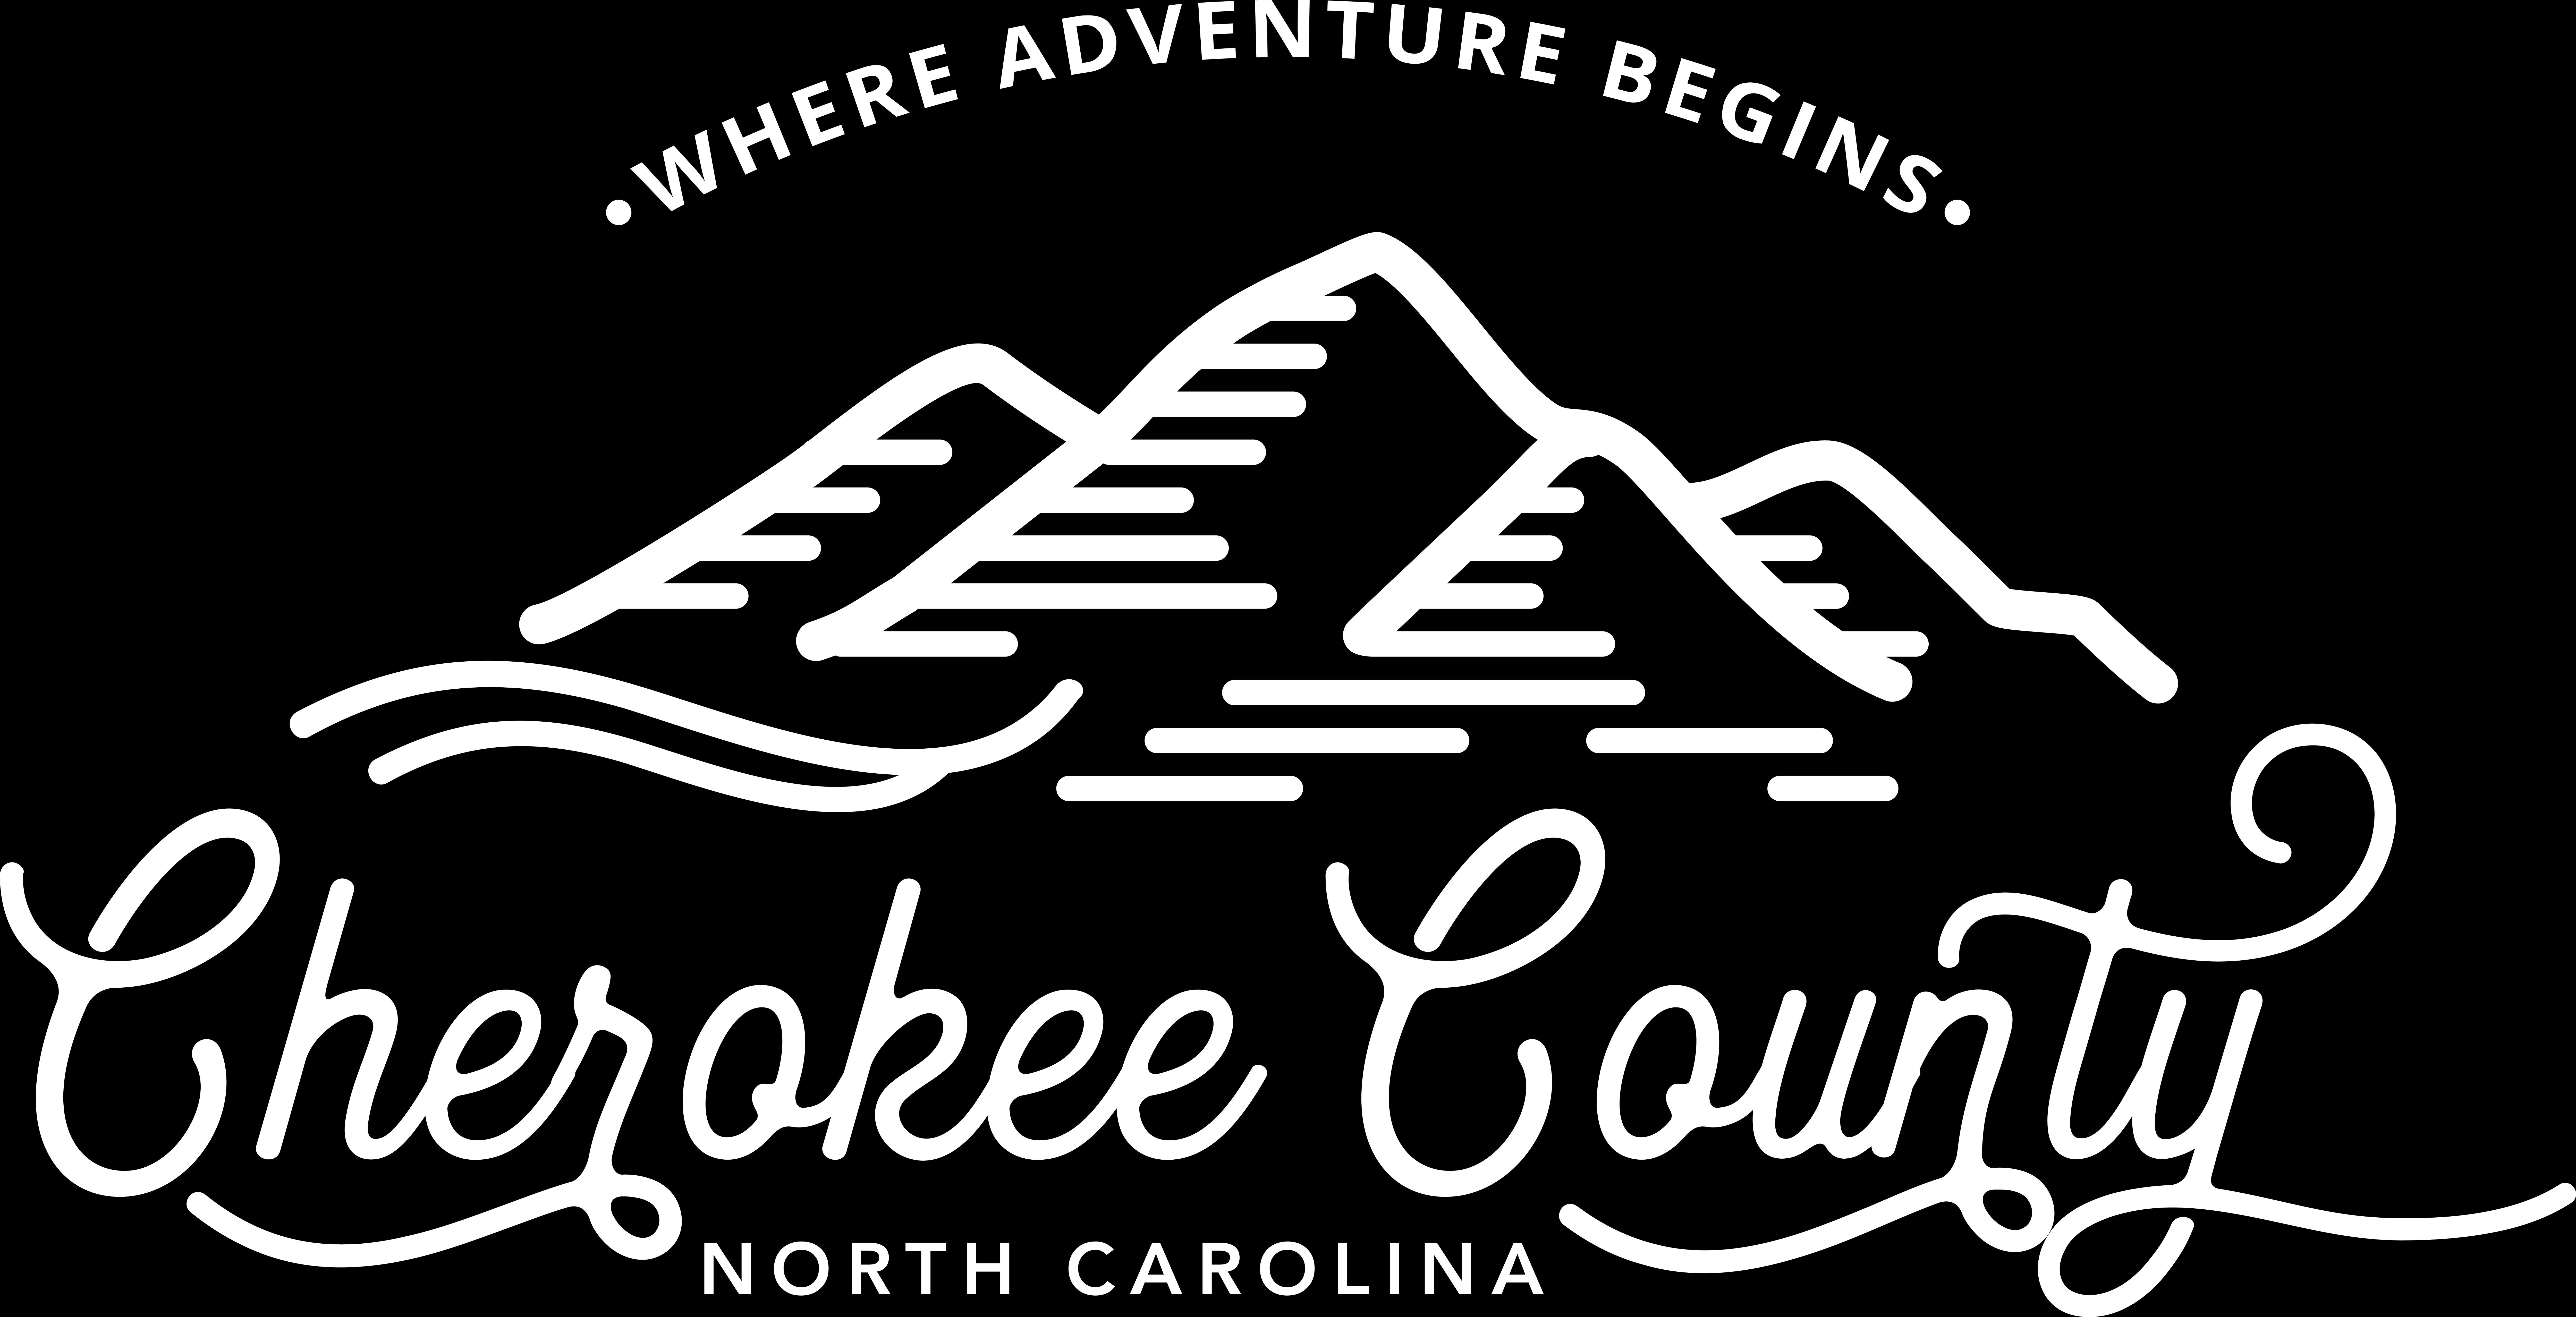 Sponsor Cherokee County